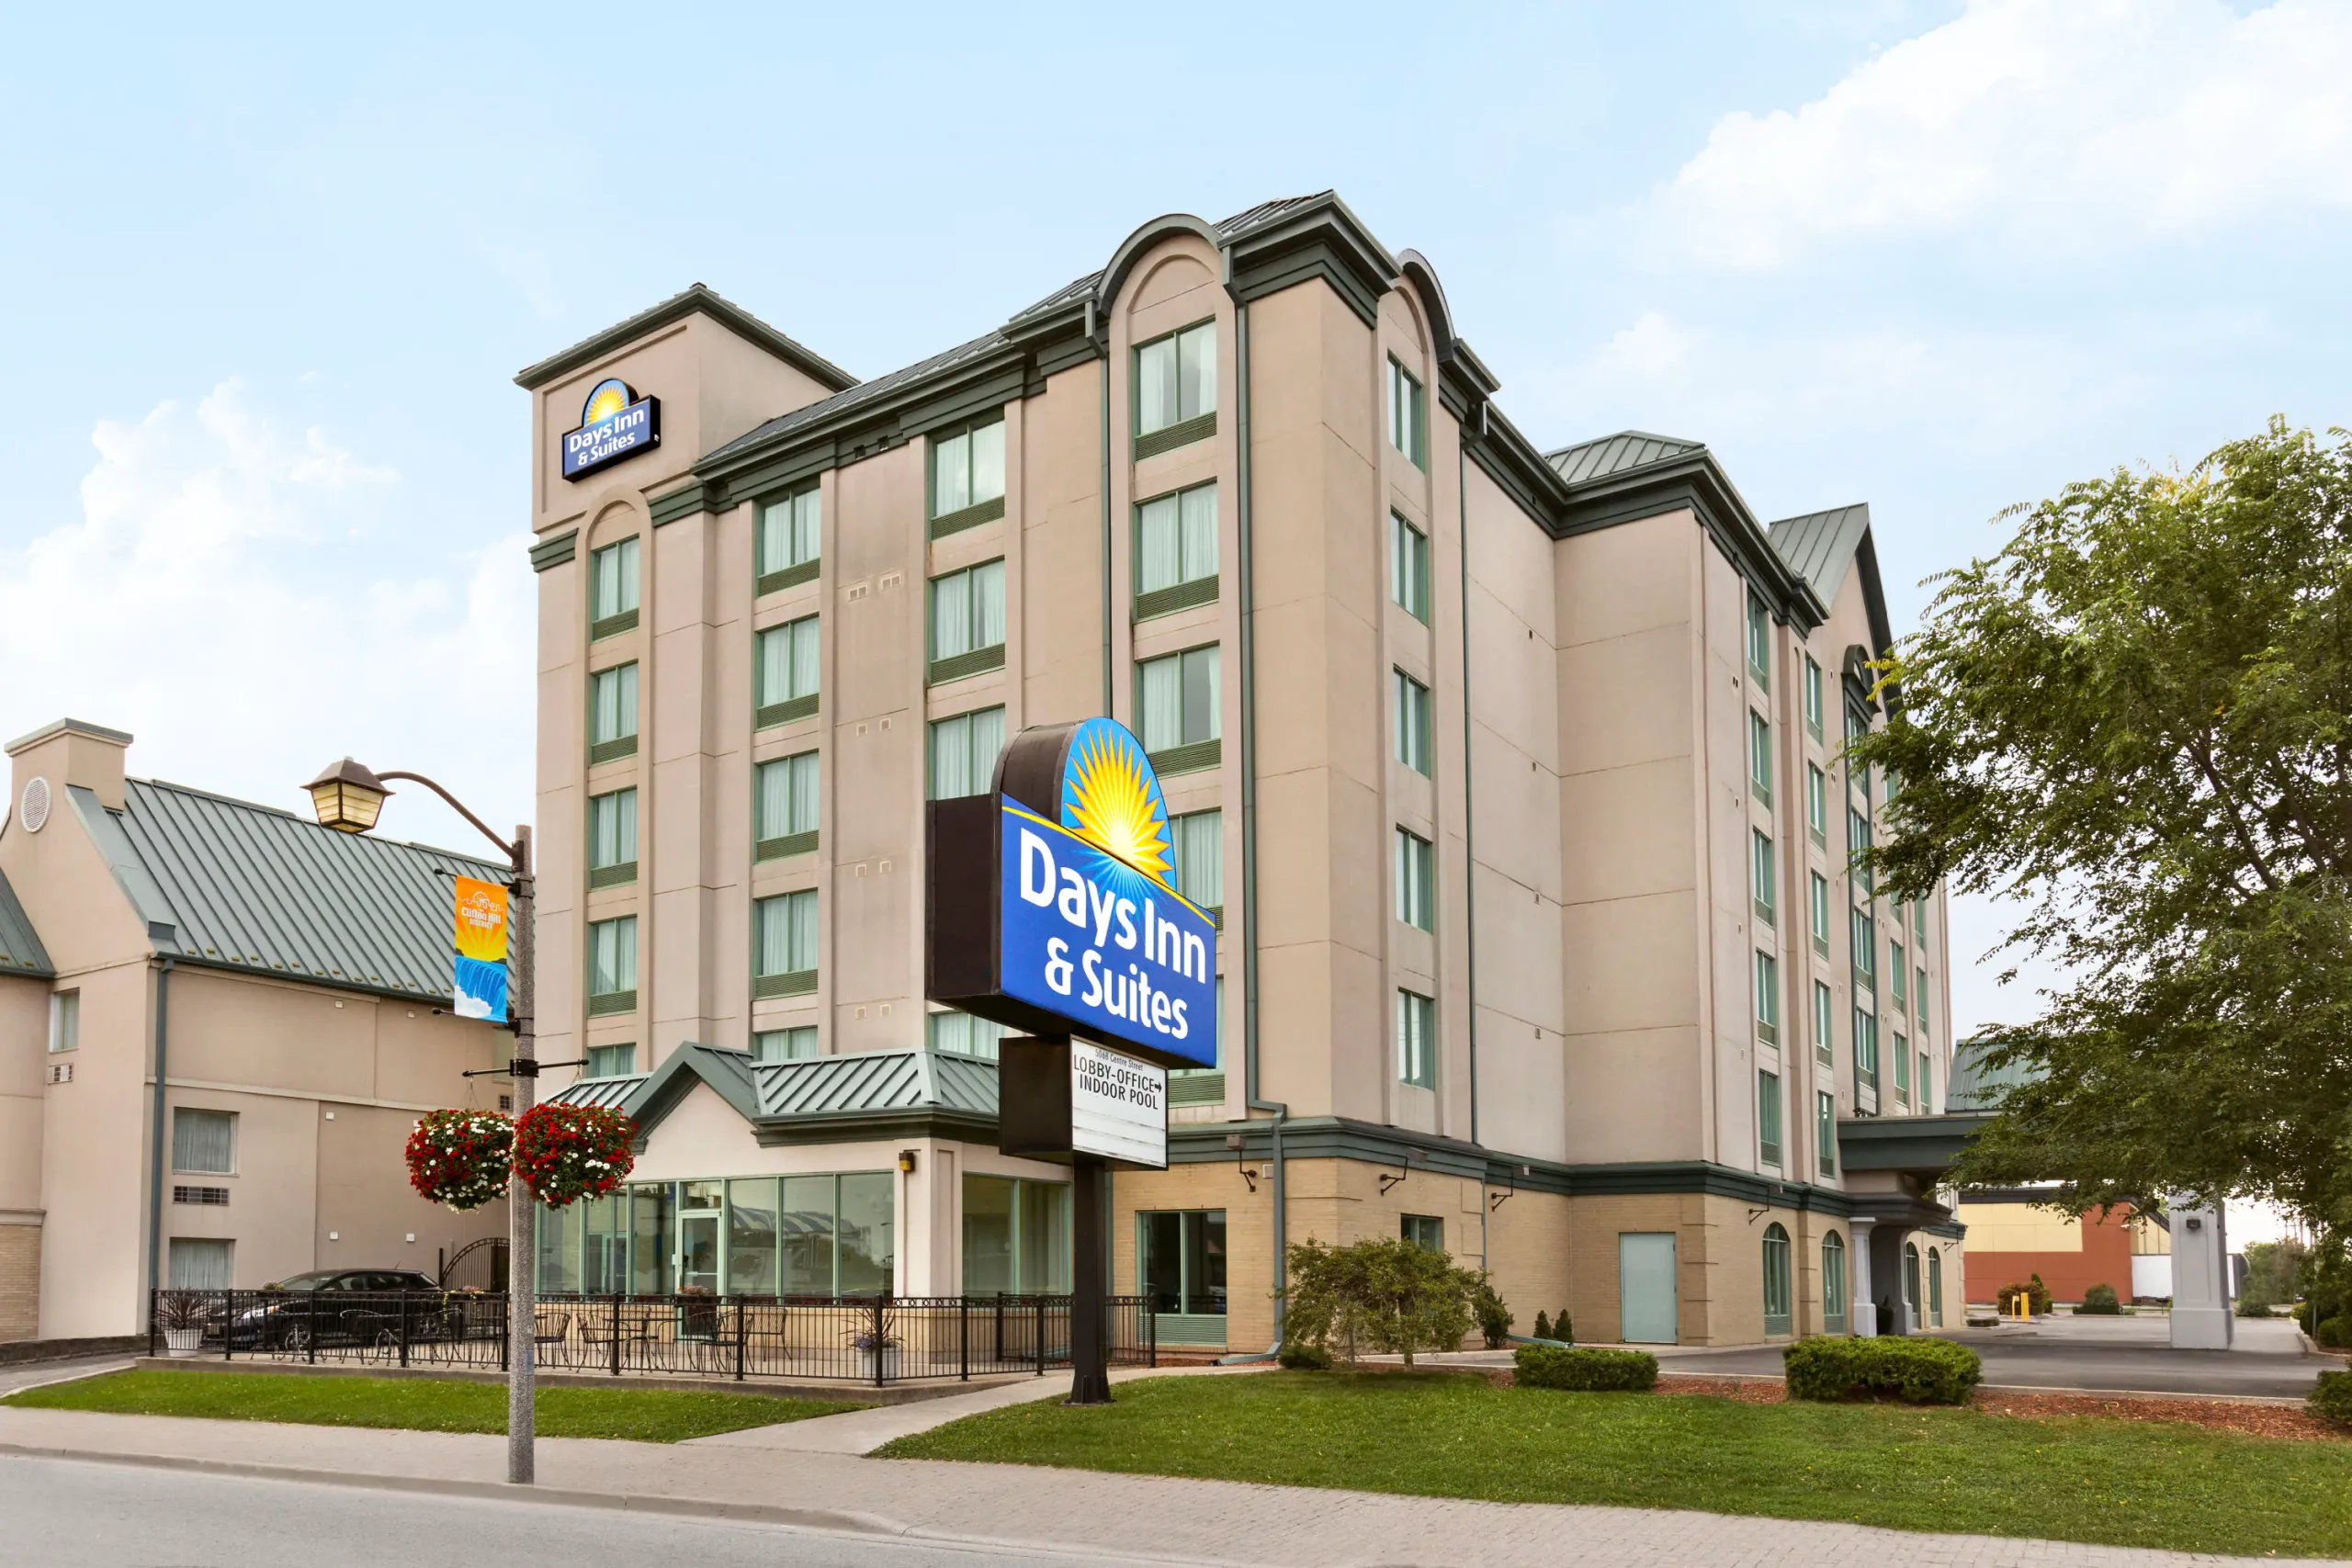 Best Hotels in Niagara Falls Days Inn